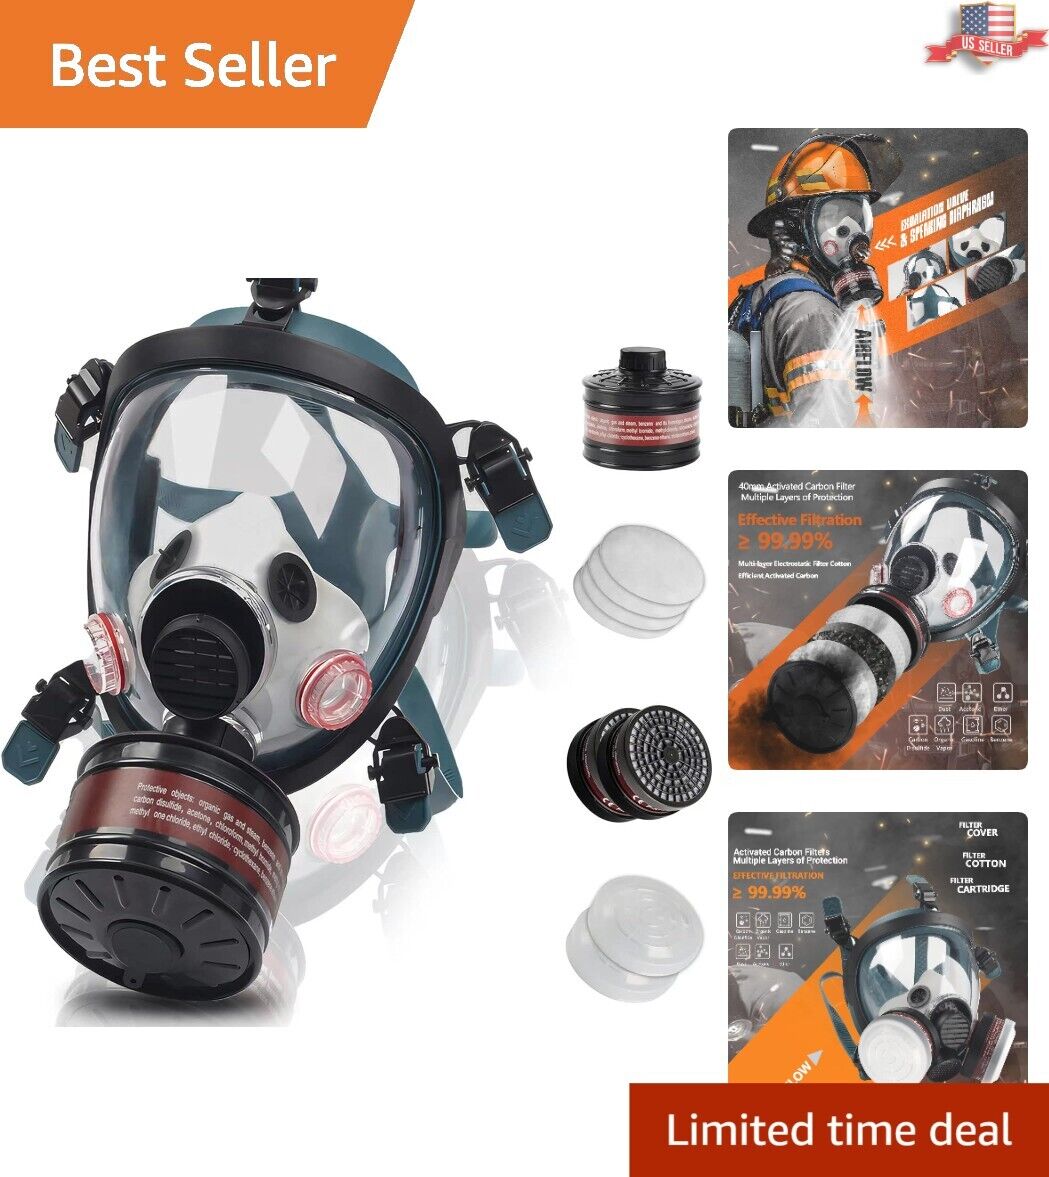 Premium Versatile Gas Mask - 40mm Carbon Filter - Gases, Dust, Chemicals